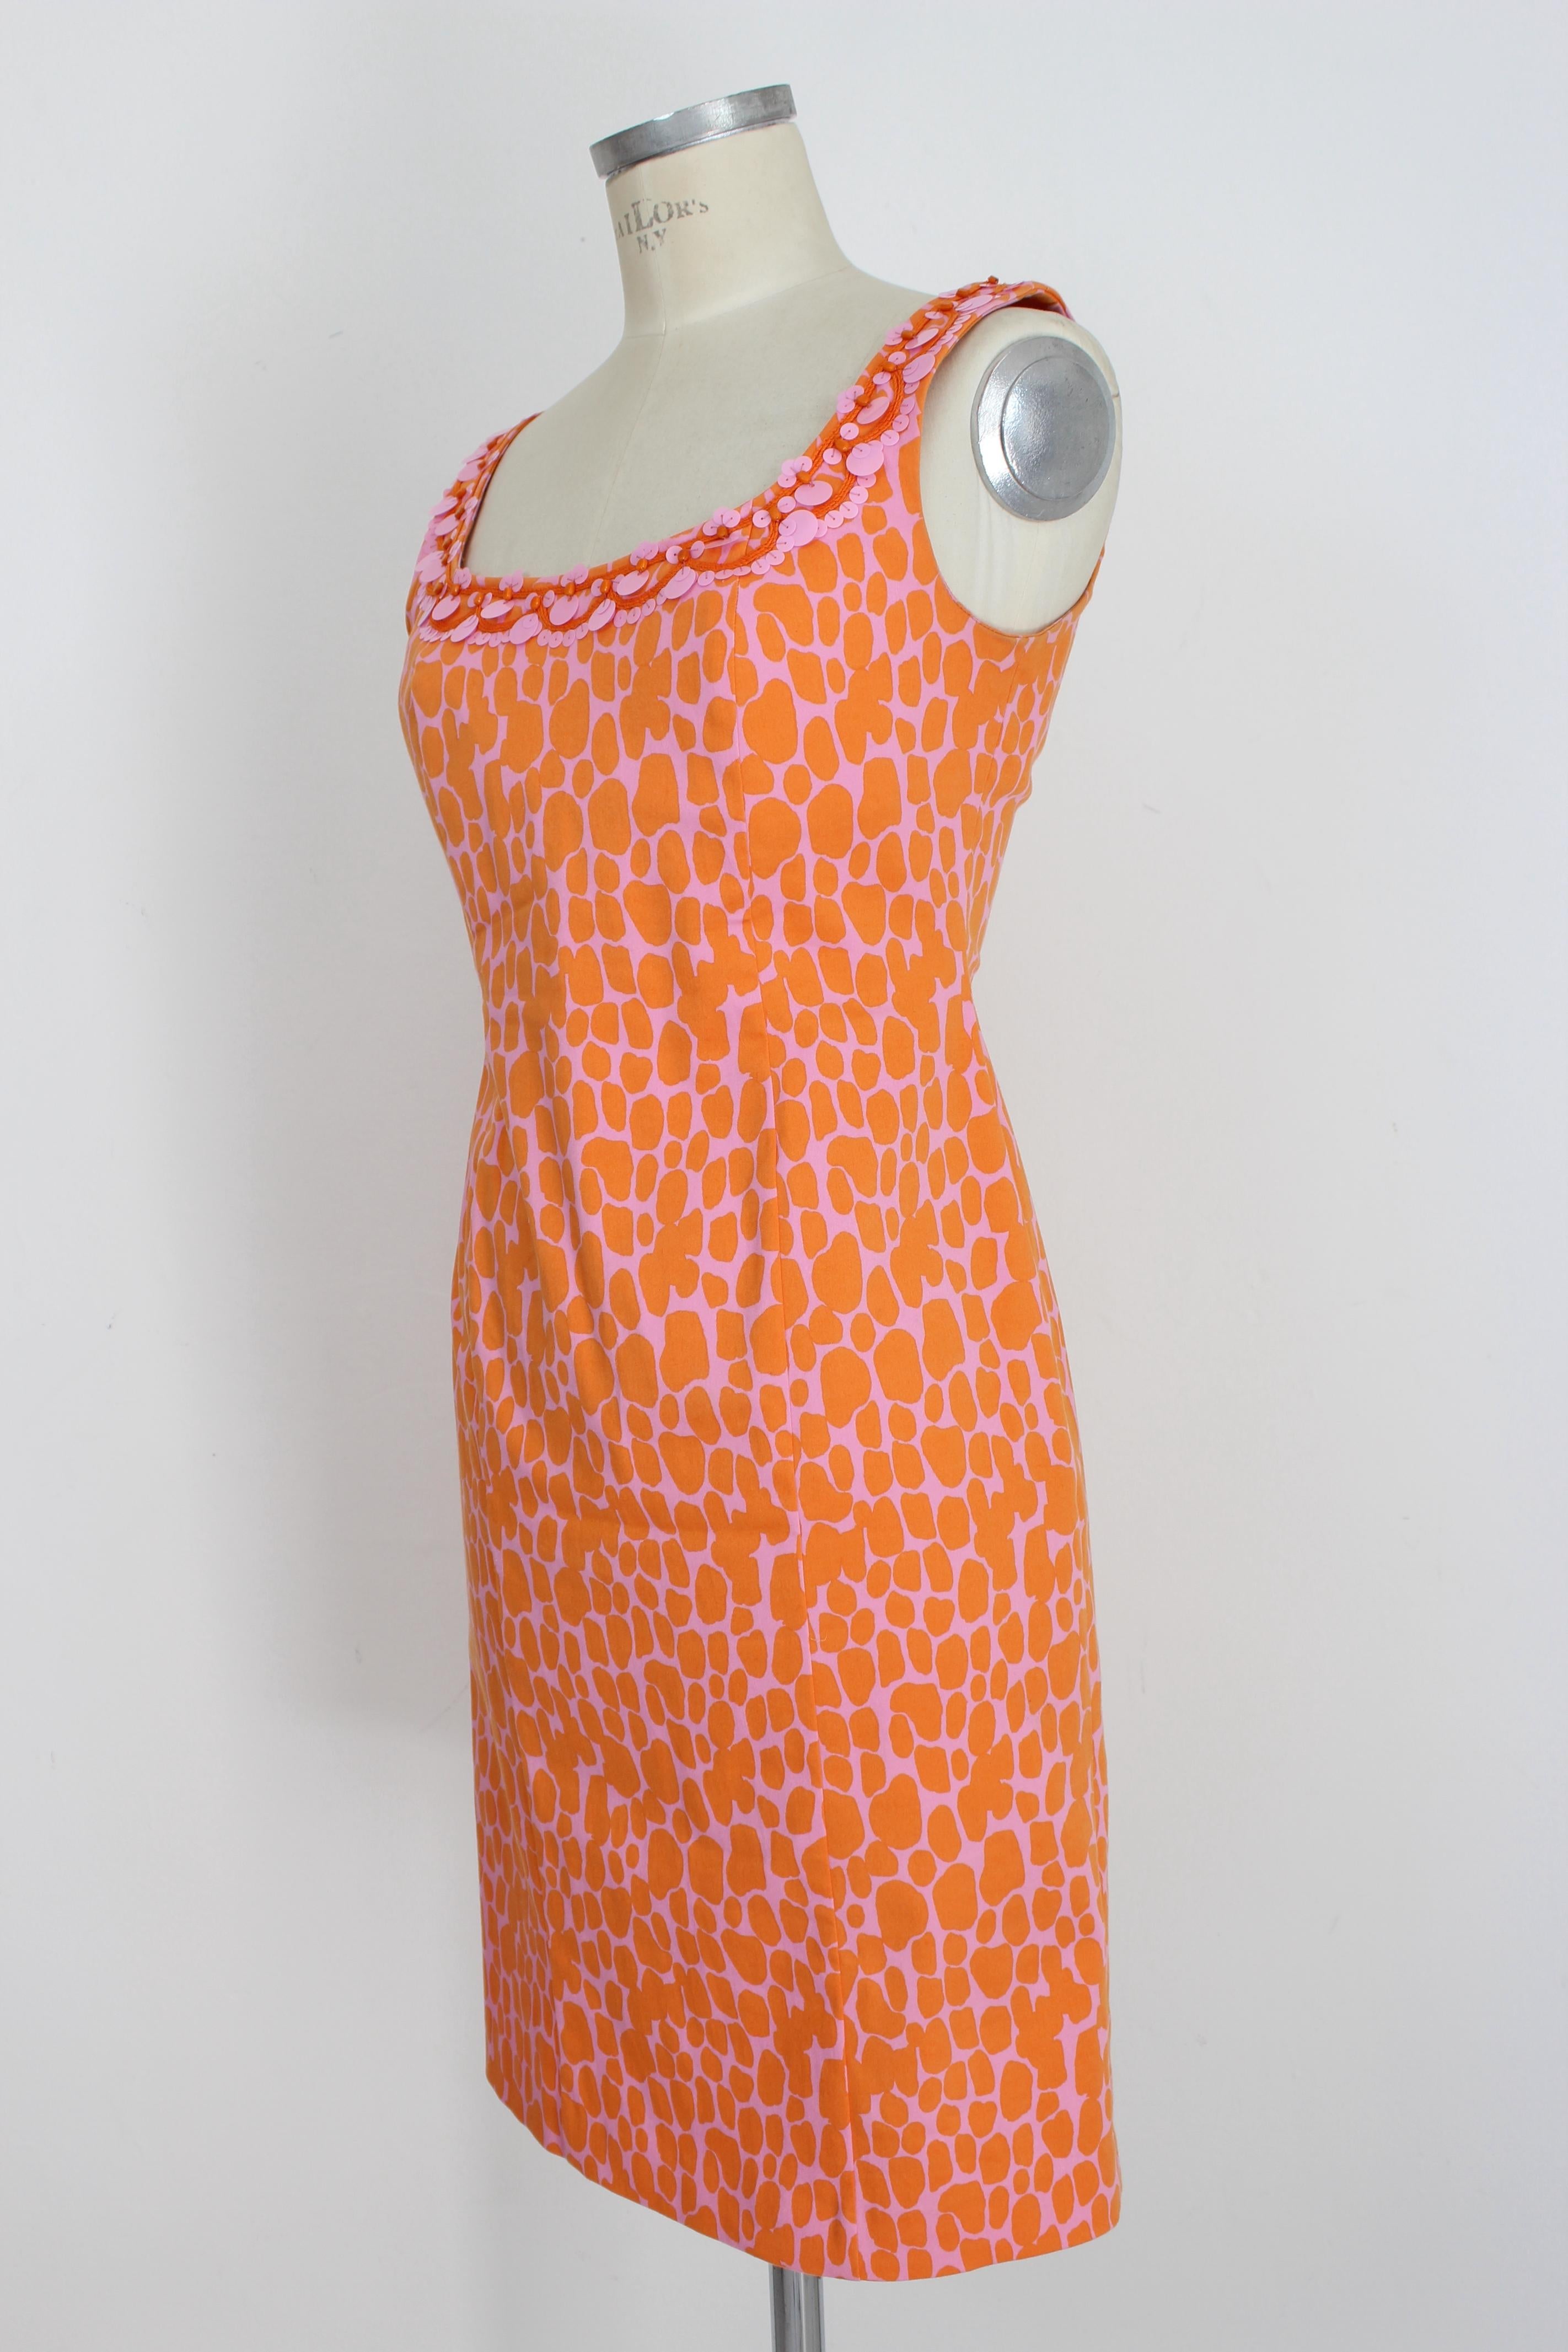 Women's Blumarine Orange Spotted Sheath Dress